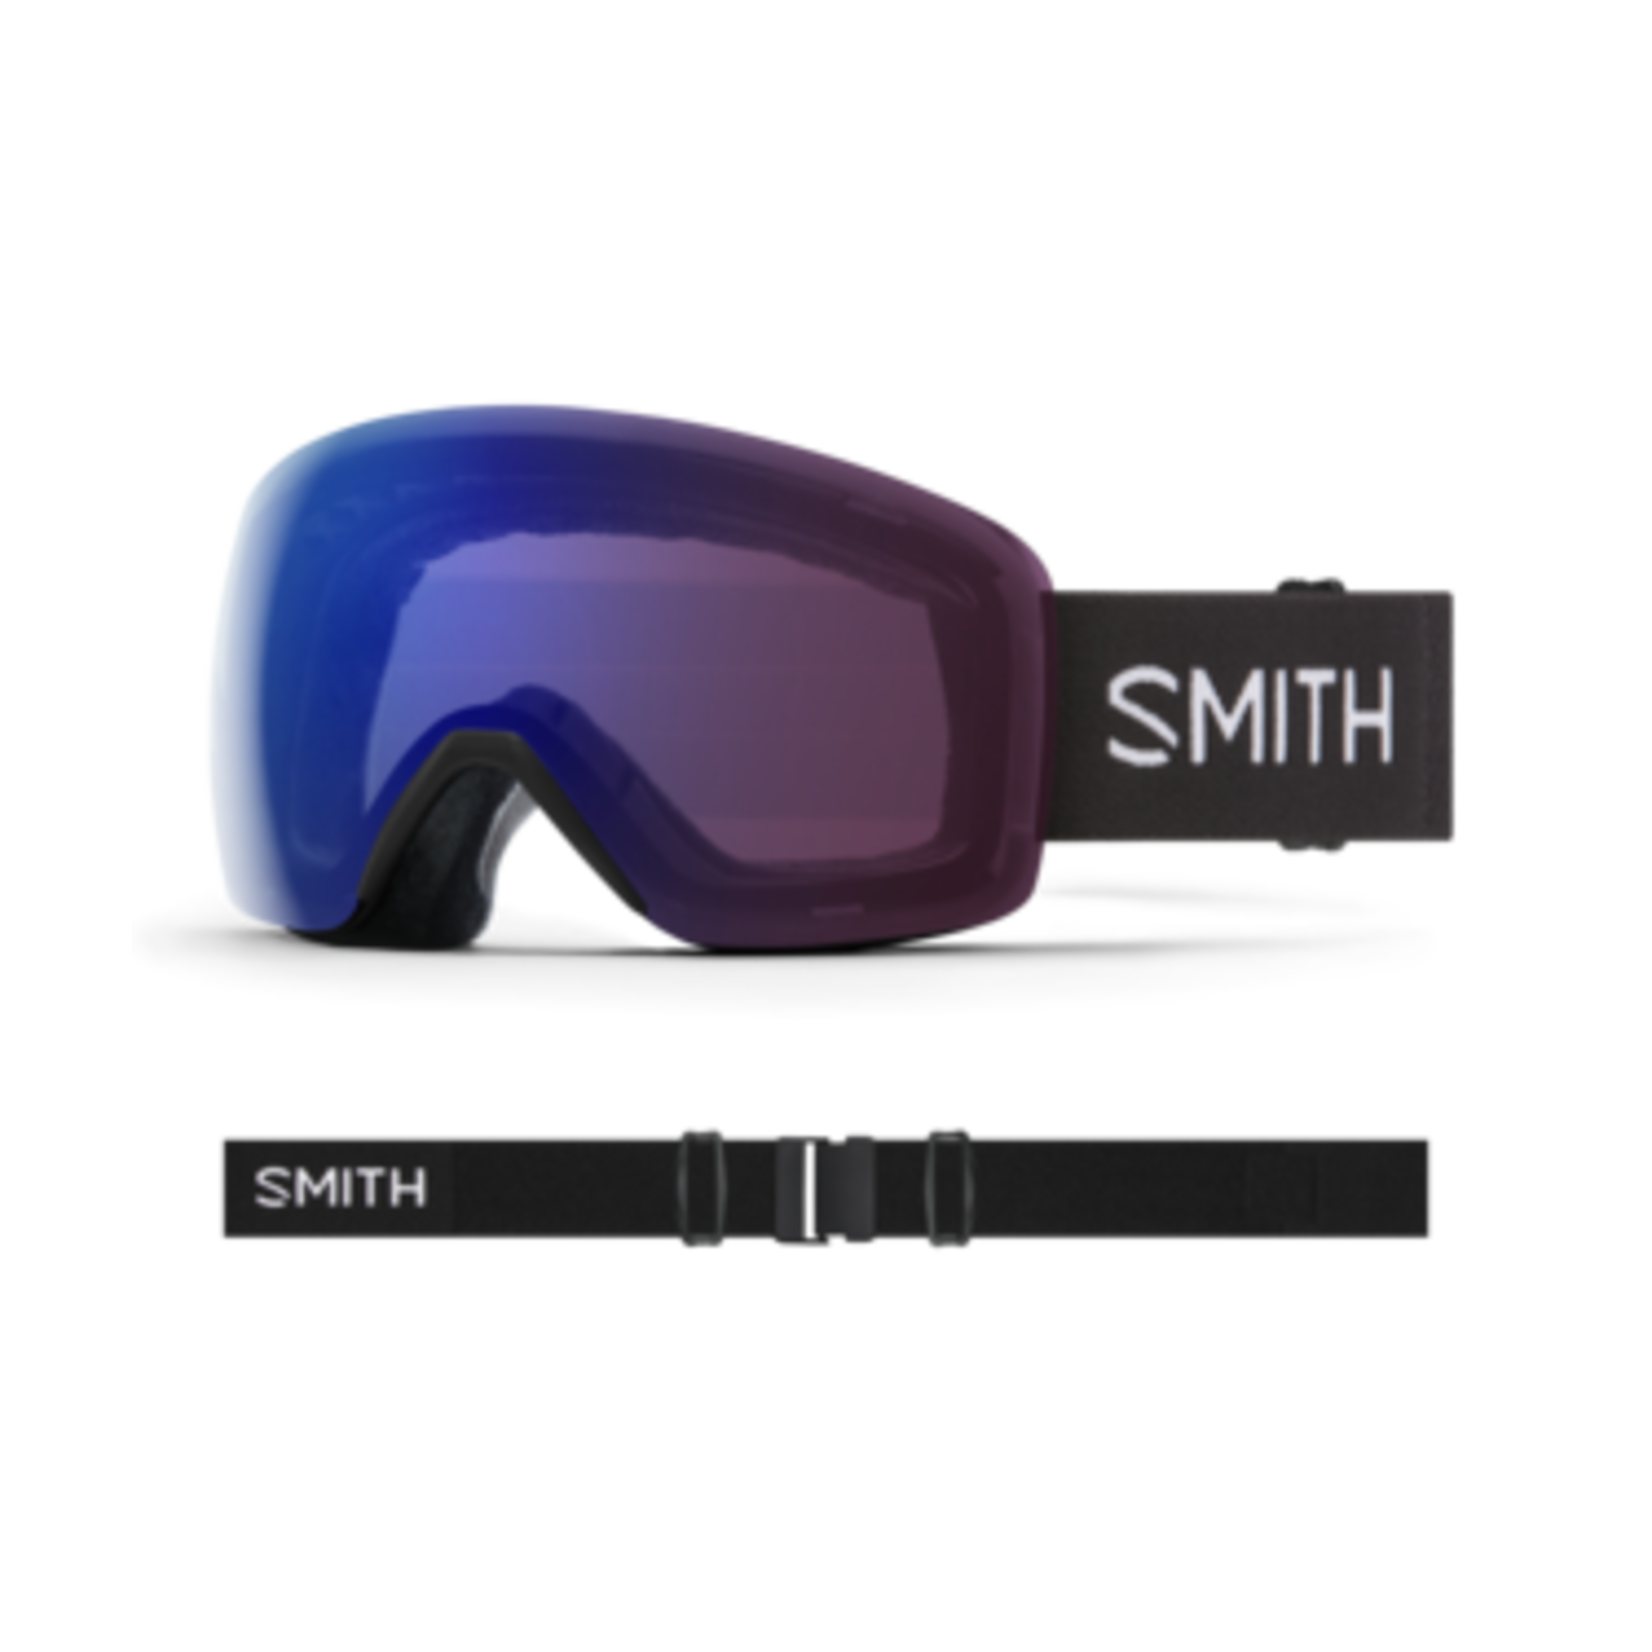 SMITH SMITH Skyline masque de ski unisexe avec Noir / Chromapop Photochromic rose